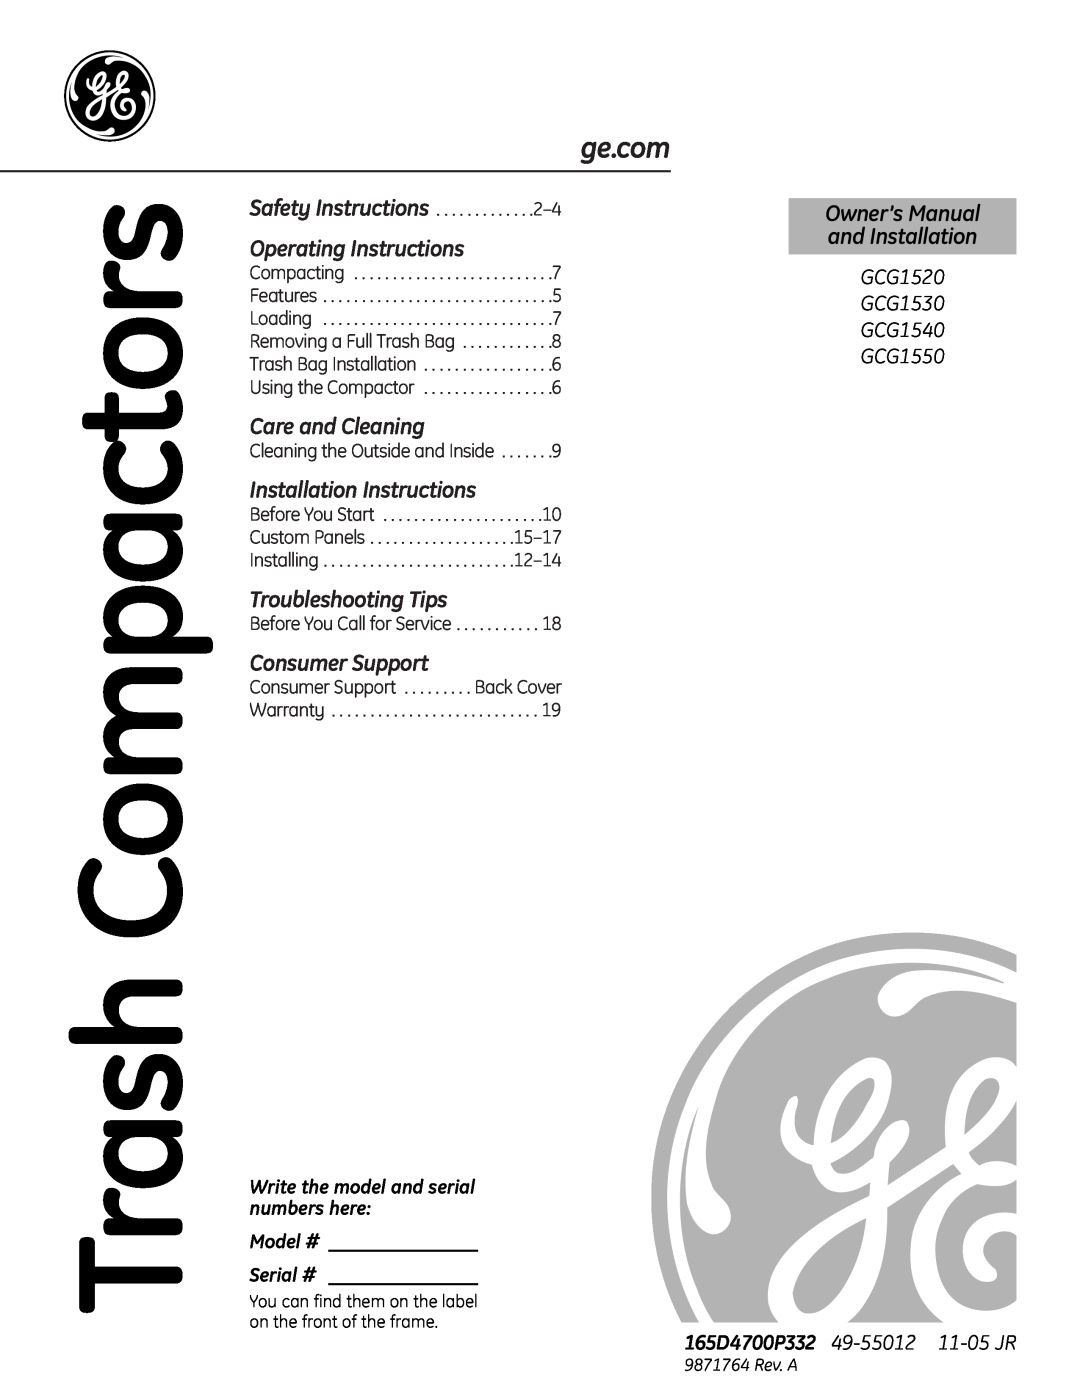 GE owner manual GEAppliances.com, GCG1520 GCG1530 GCG1540 GCG1550, Part No. 165D4700P206 Pub. No. 49-5880-1 10-01 JR 